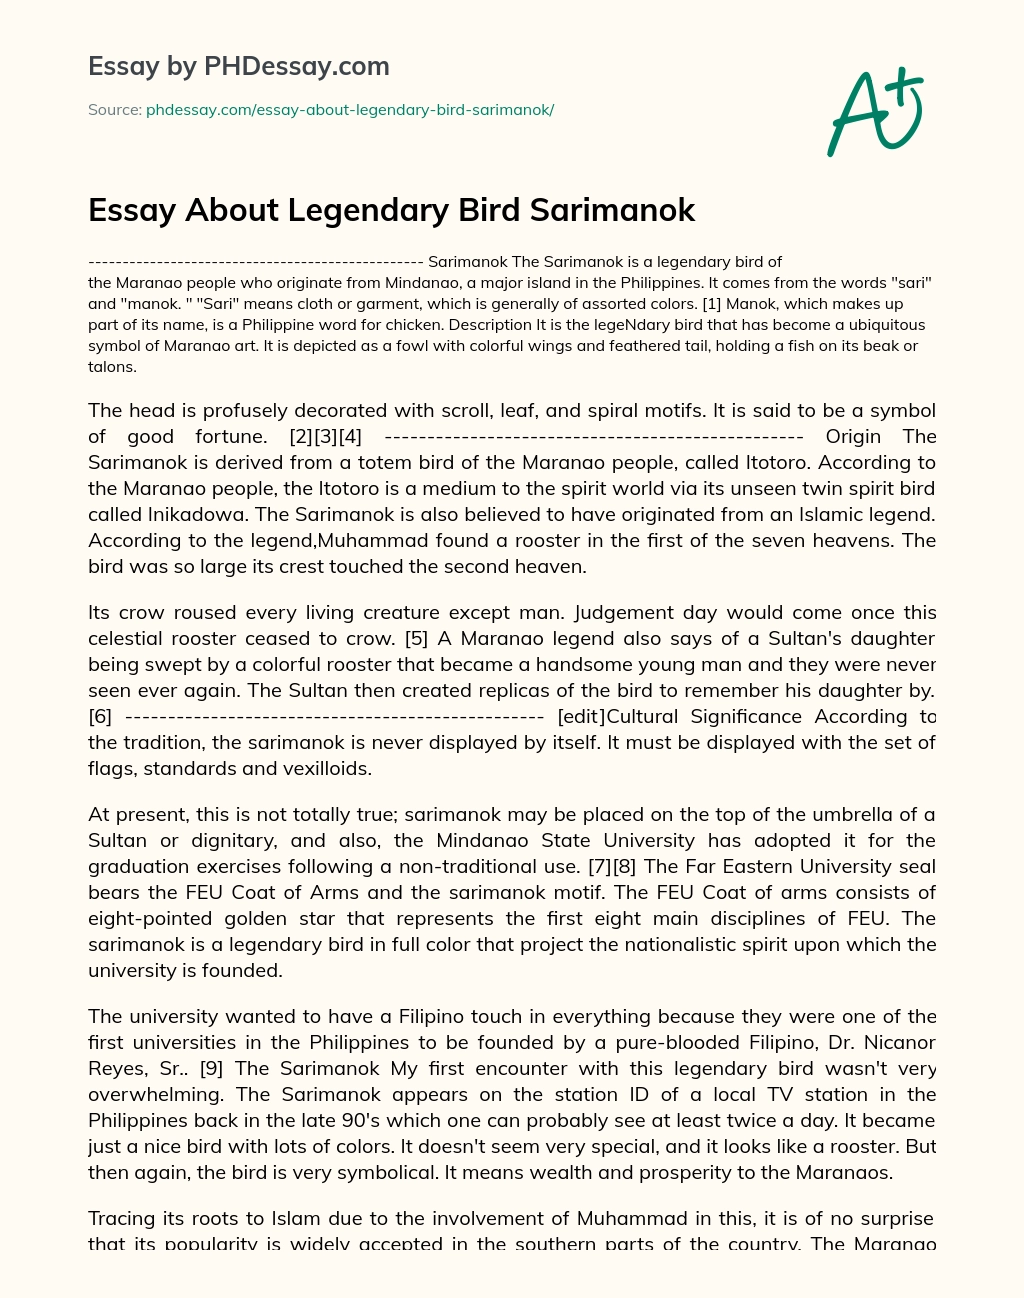 Essay About Legendary Bird Sarimanok essay